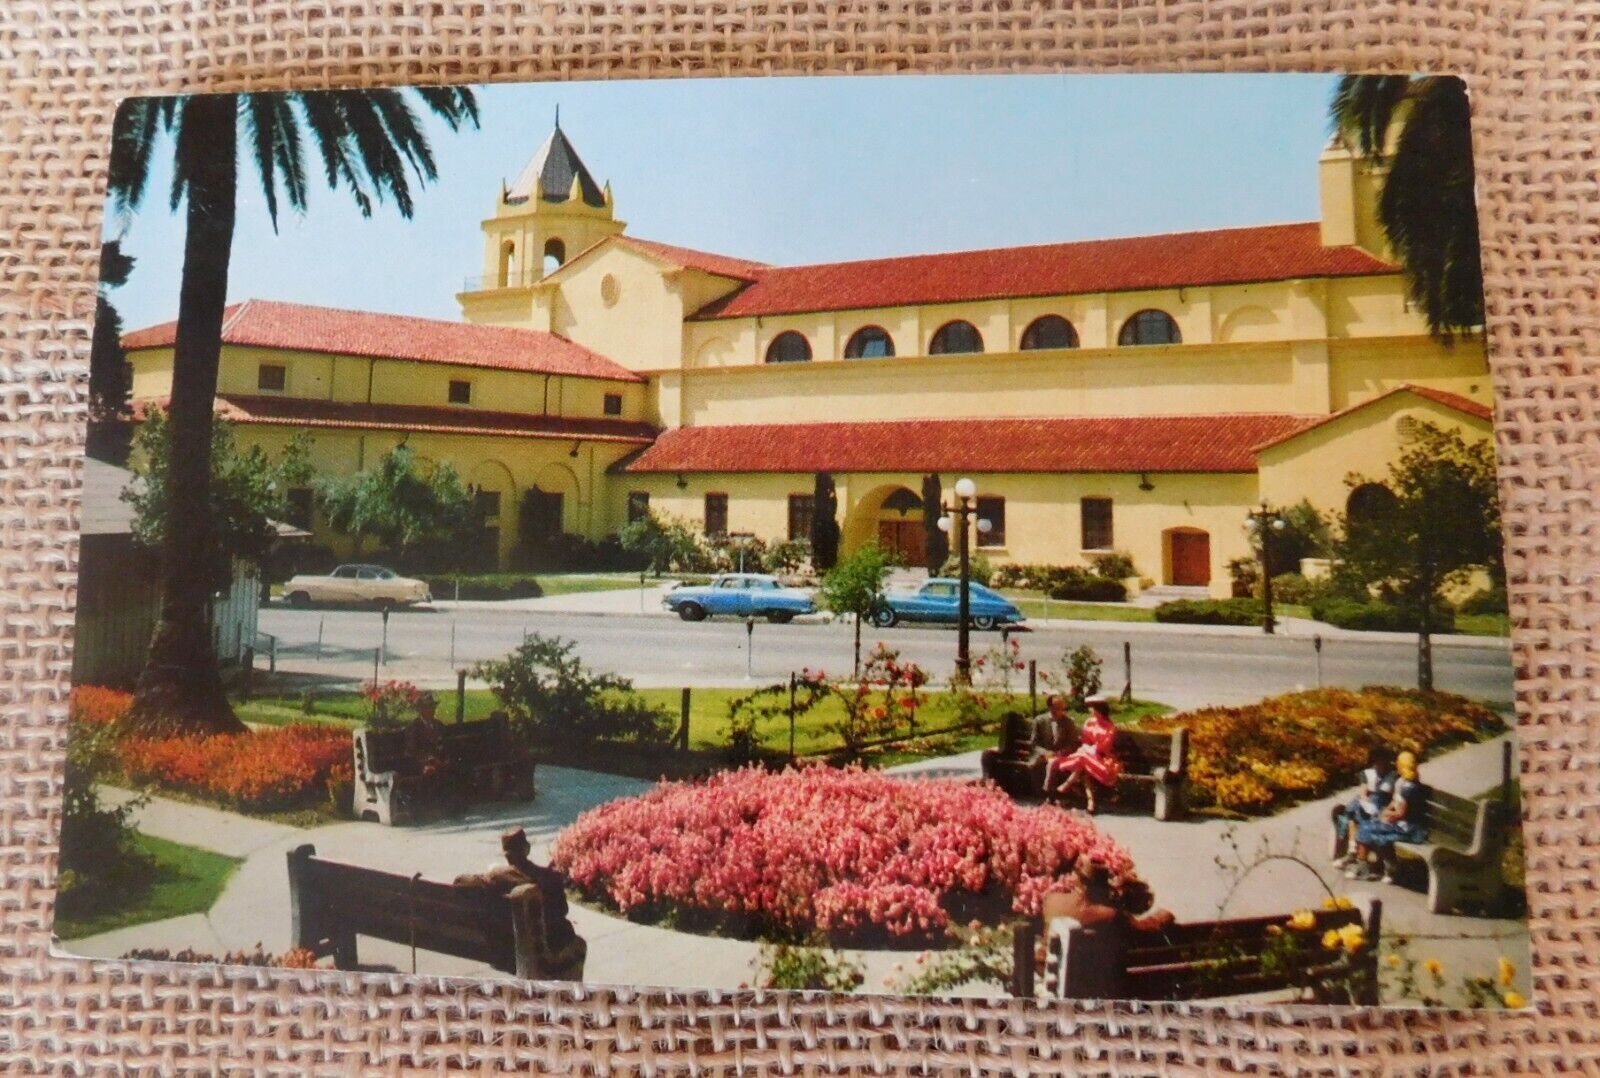 City of San Jose, CA Municipal Civic Auditorium 1950's Photo Postcard